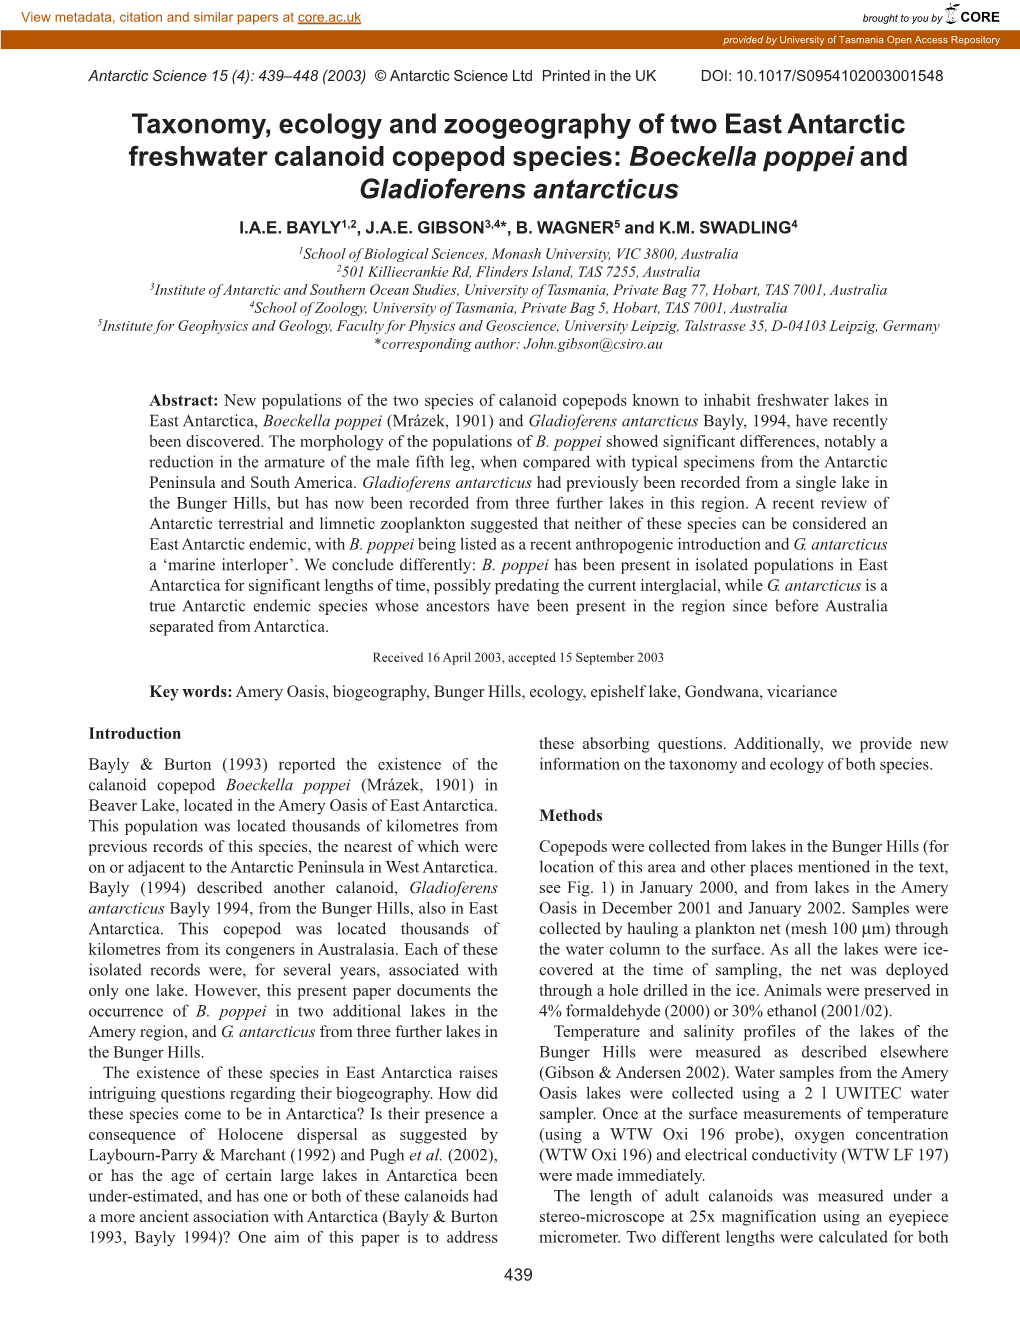 Boeckella Poppei and Gladioferens Antarcticus I.A.E